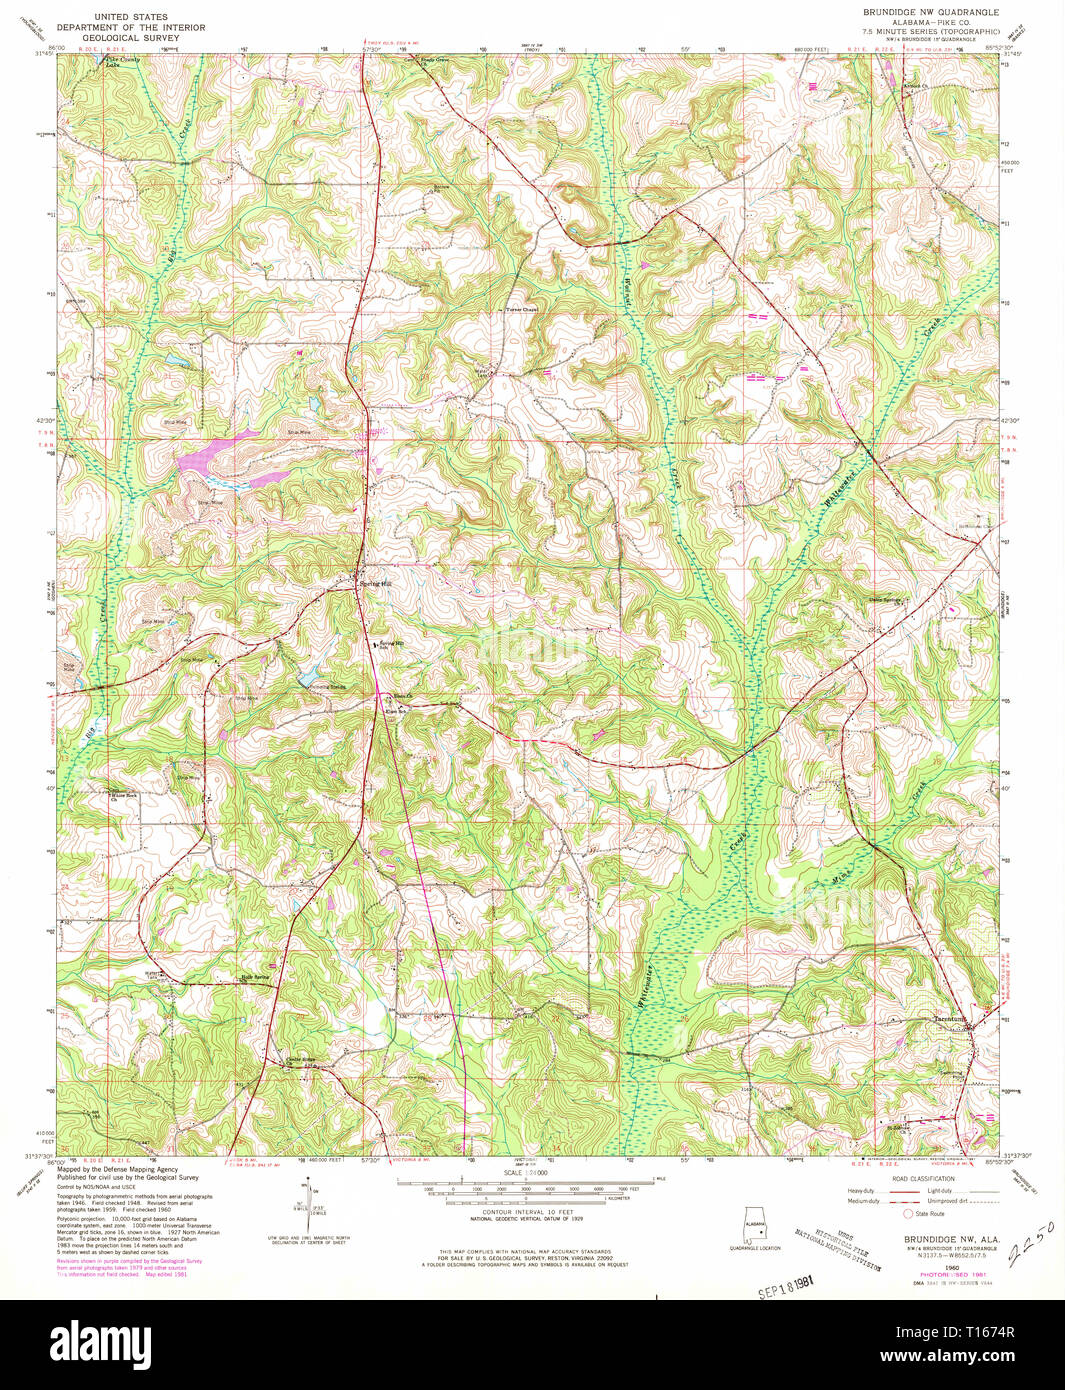 USGS TOPO Map Alabama AL Brundidge NW 303364 1960 24000 Stock Photo